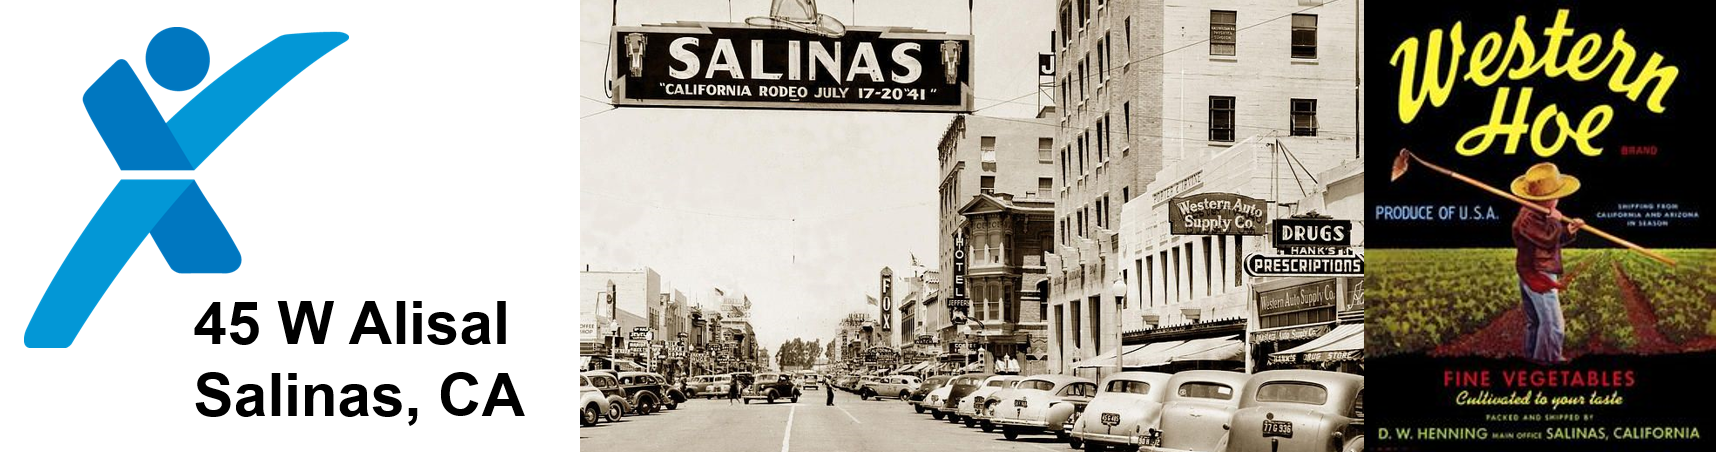 Banner - Salinas 4